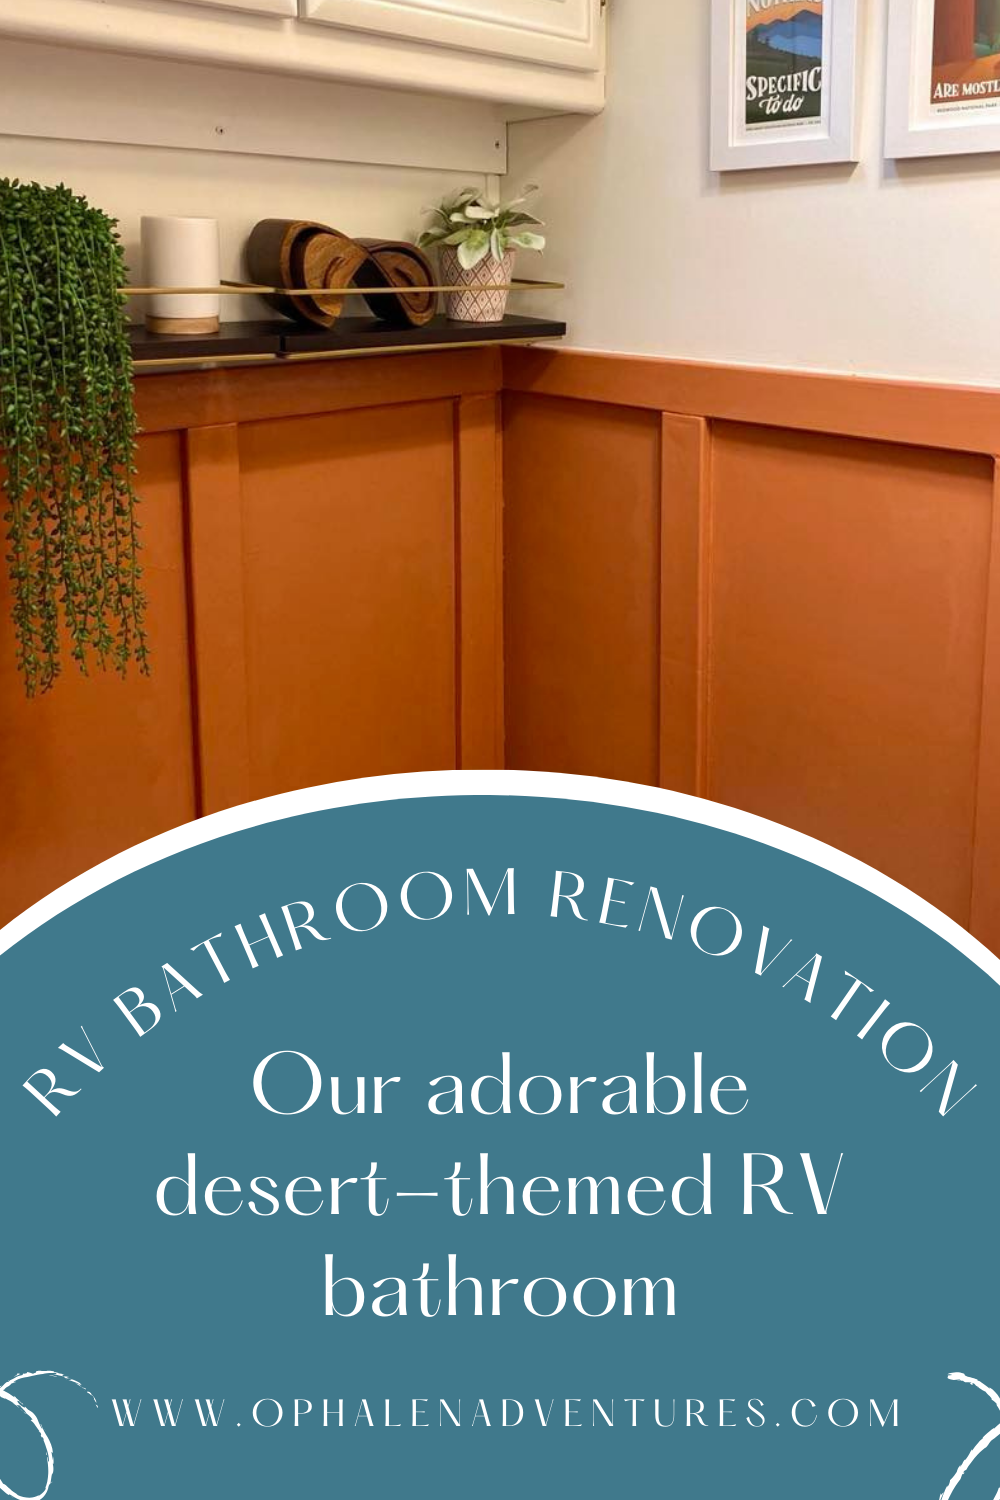 RV Bathroom Renovation: Insider Peek at This Orange Room